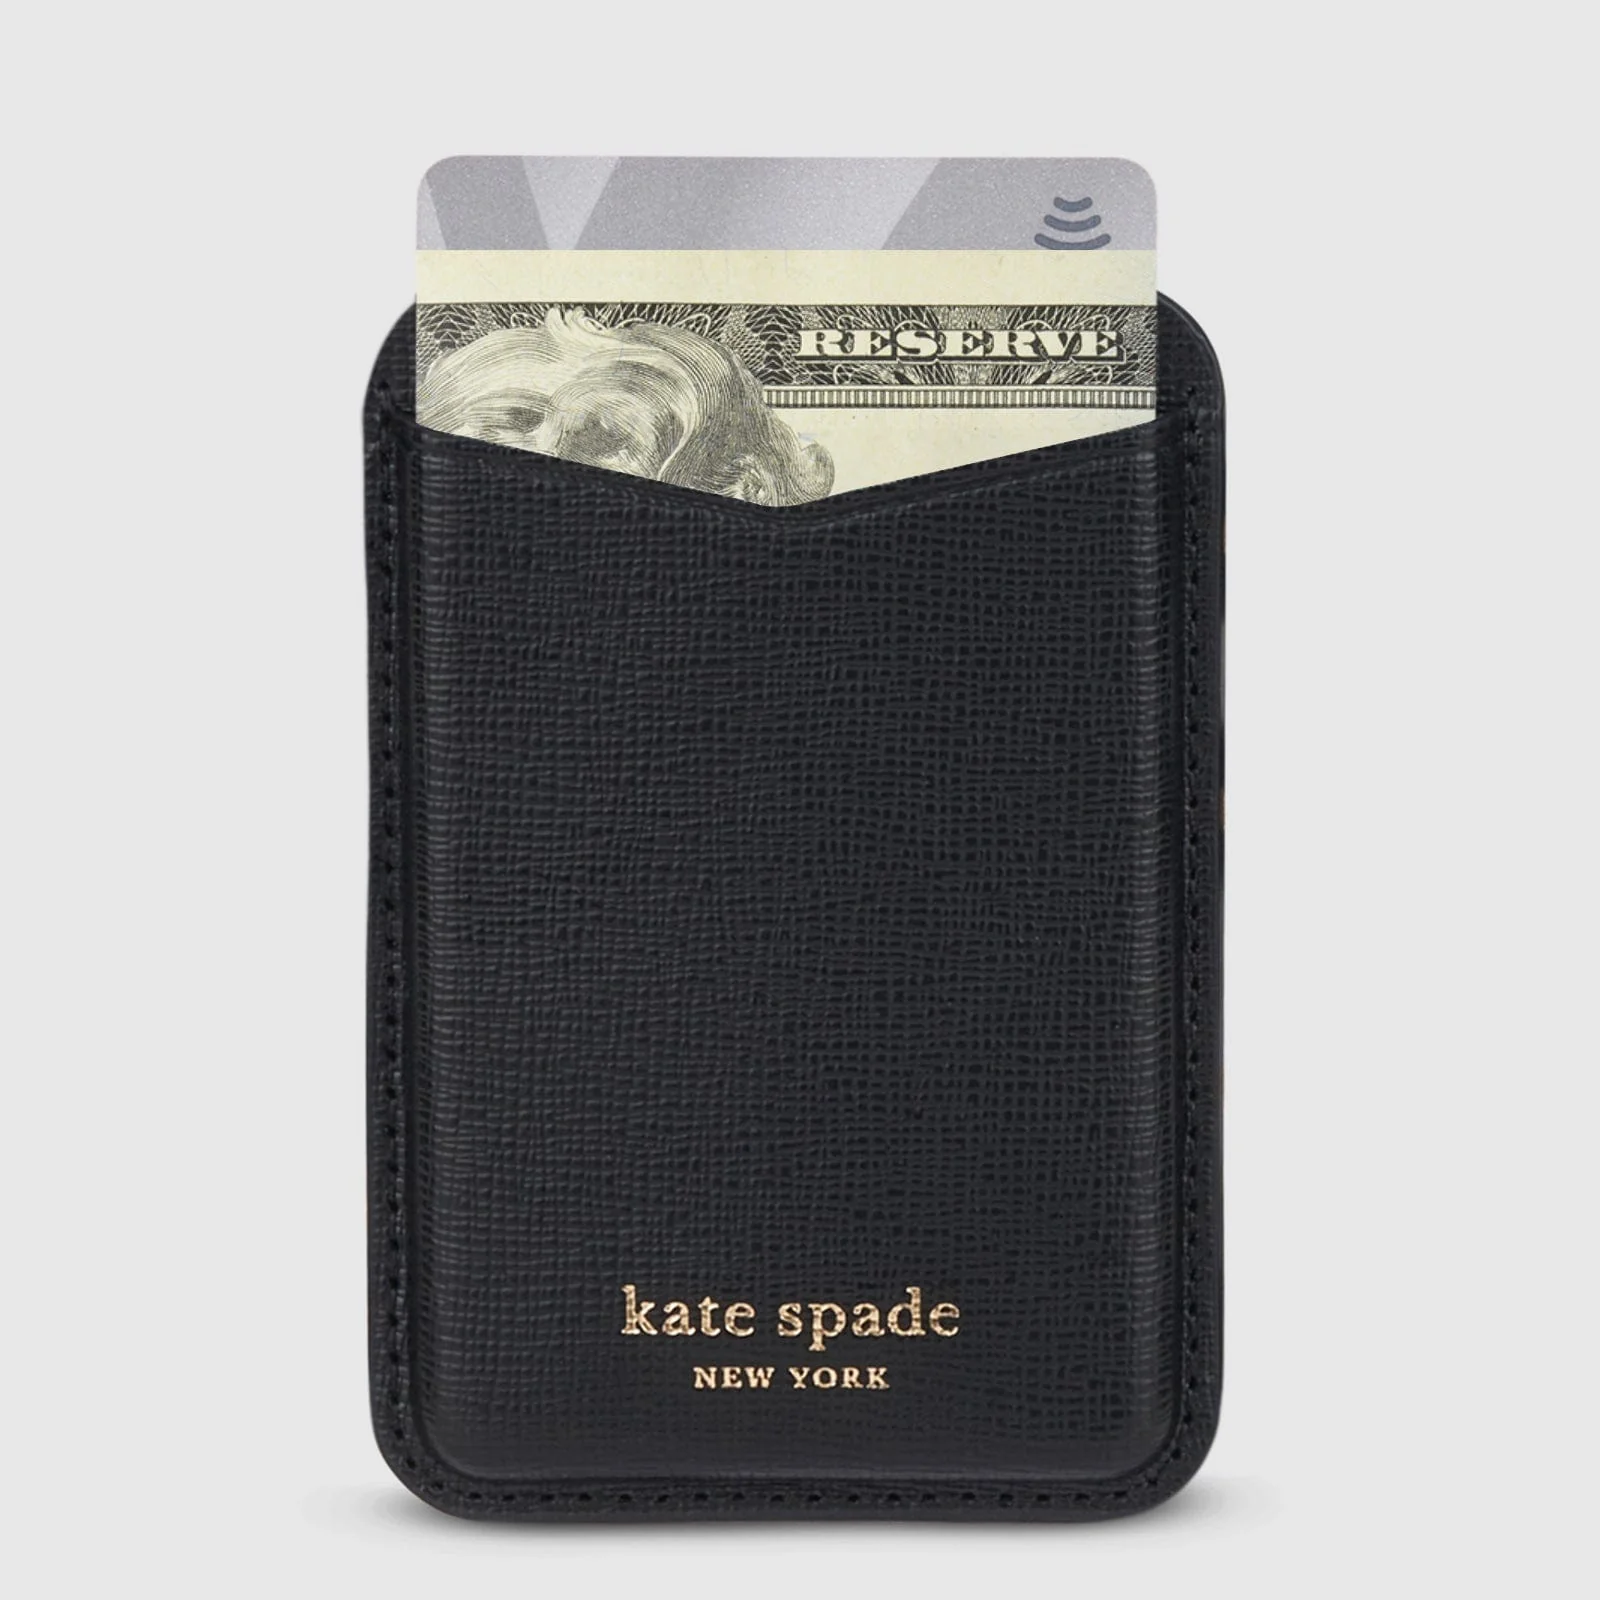 Kate Spade New York รุ่น Magnetic Card Holder - ที่เก็บบัตรติดหลังมือถือ - ลาย Black